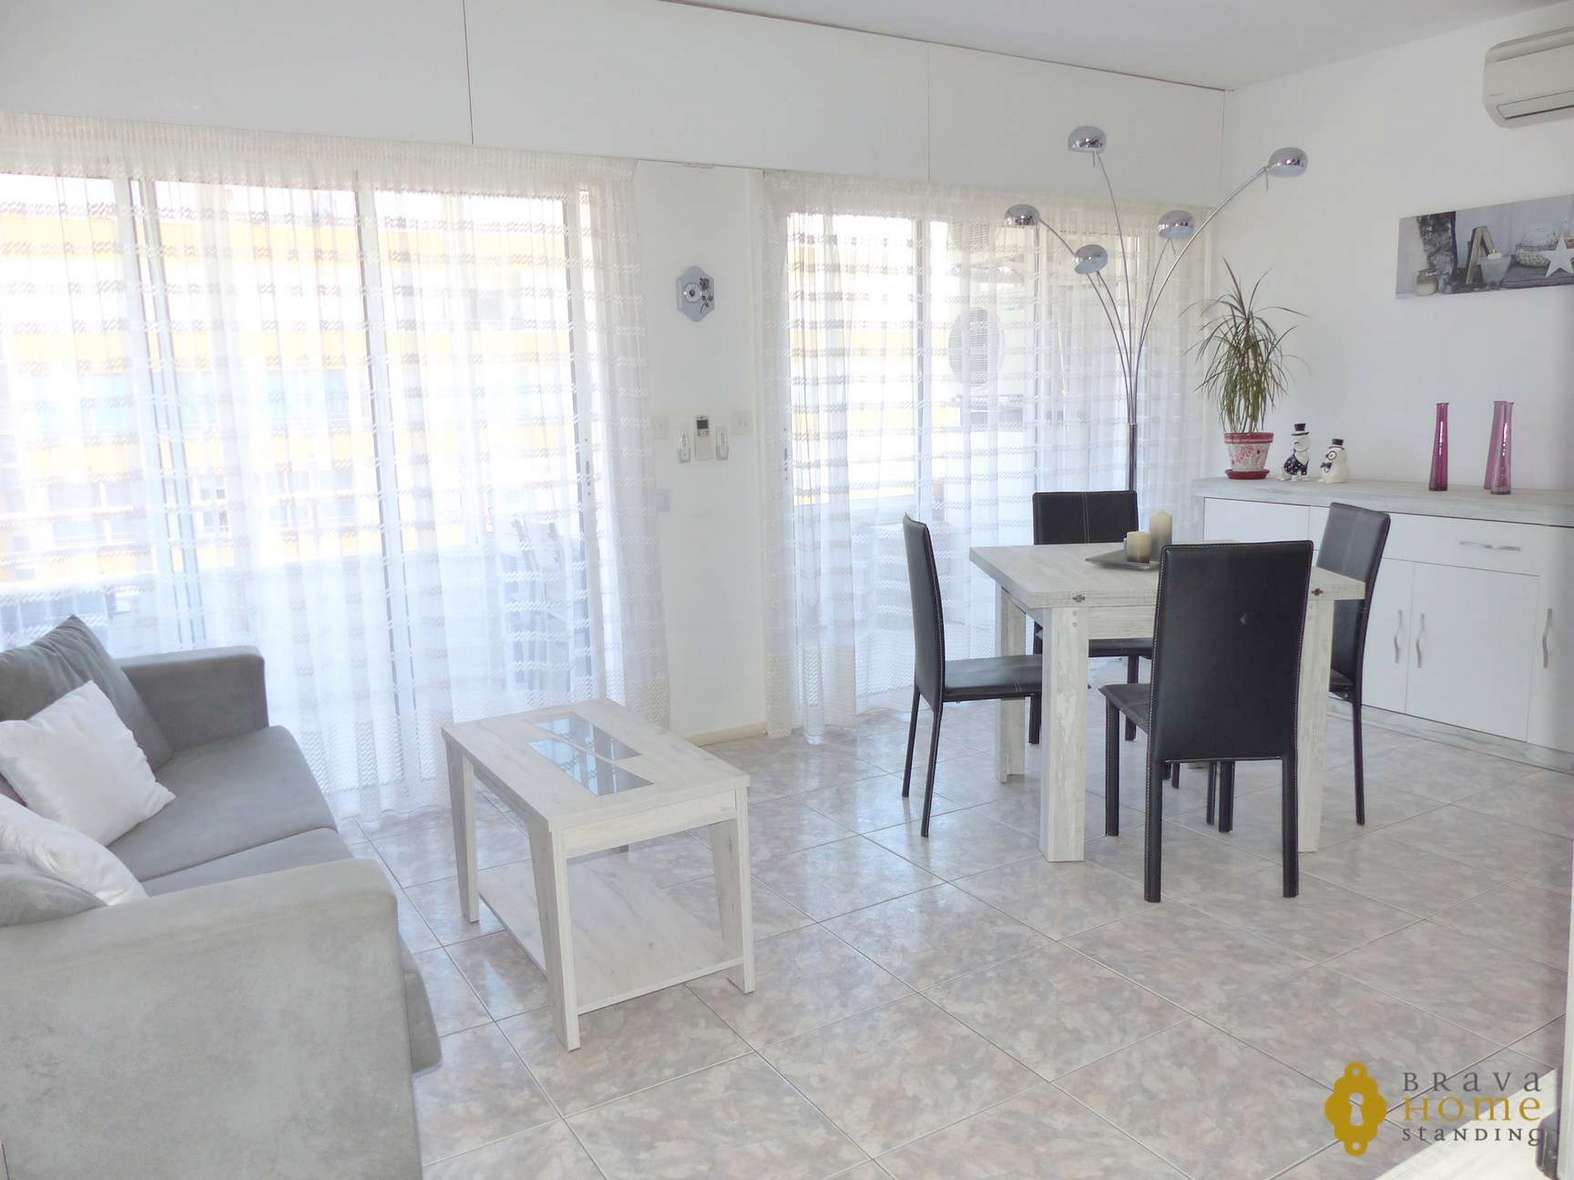 Splendid renovated apartment with sea view, for sale in Santa Margarita